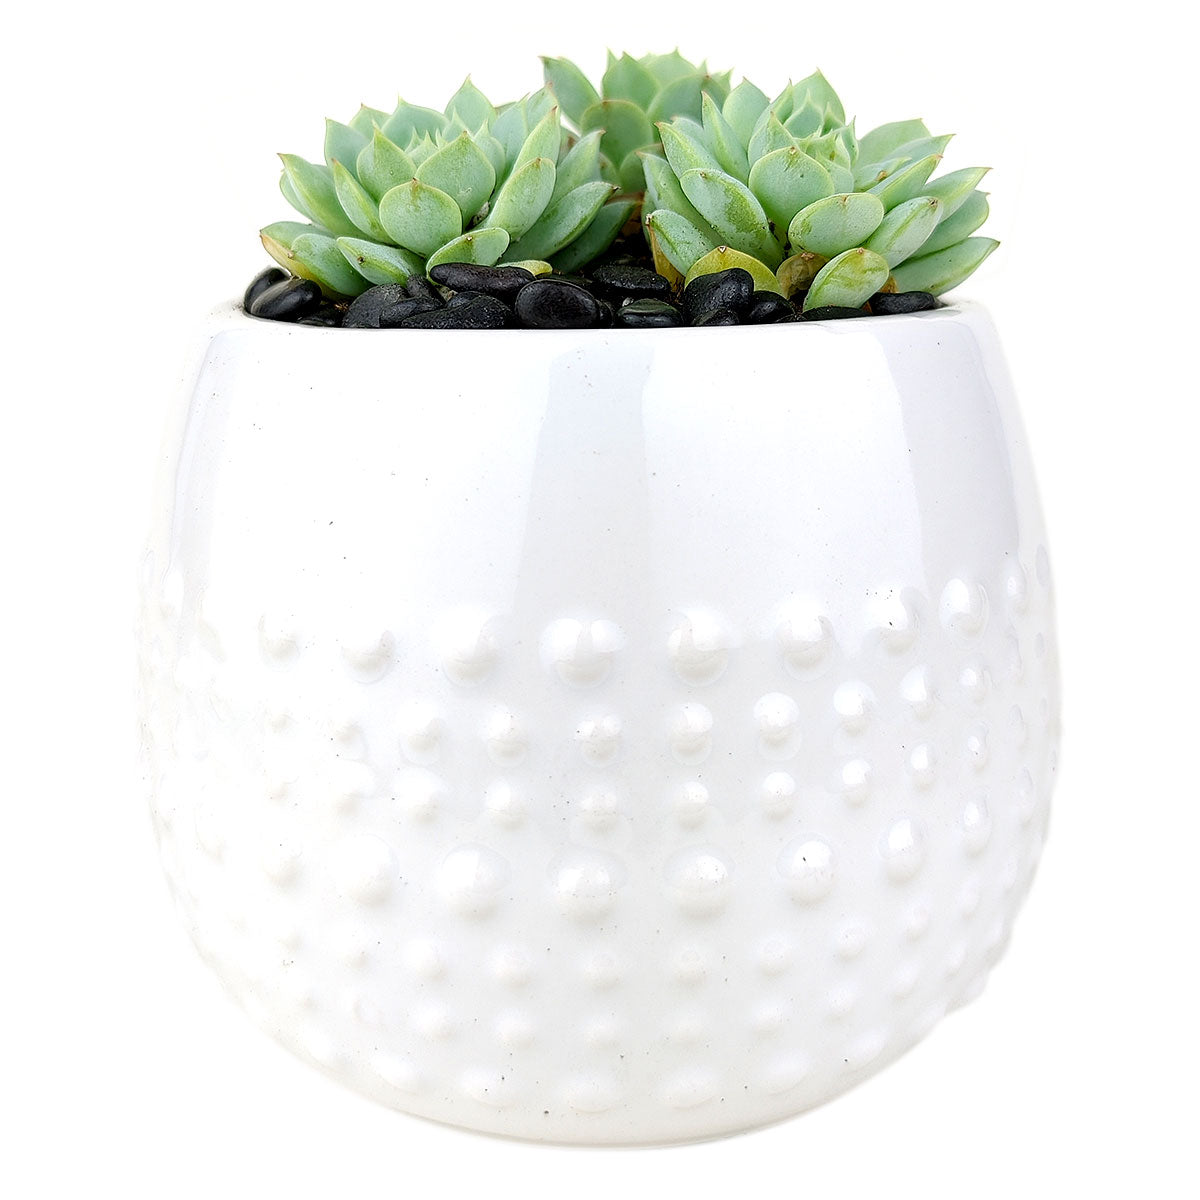 White Dot Pot for sale, ceramic vase for home decor, ceramic succulent and cactus pots for sale, Succulent gift ideas